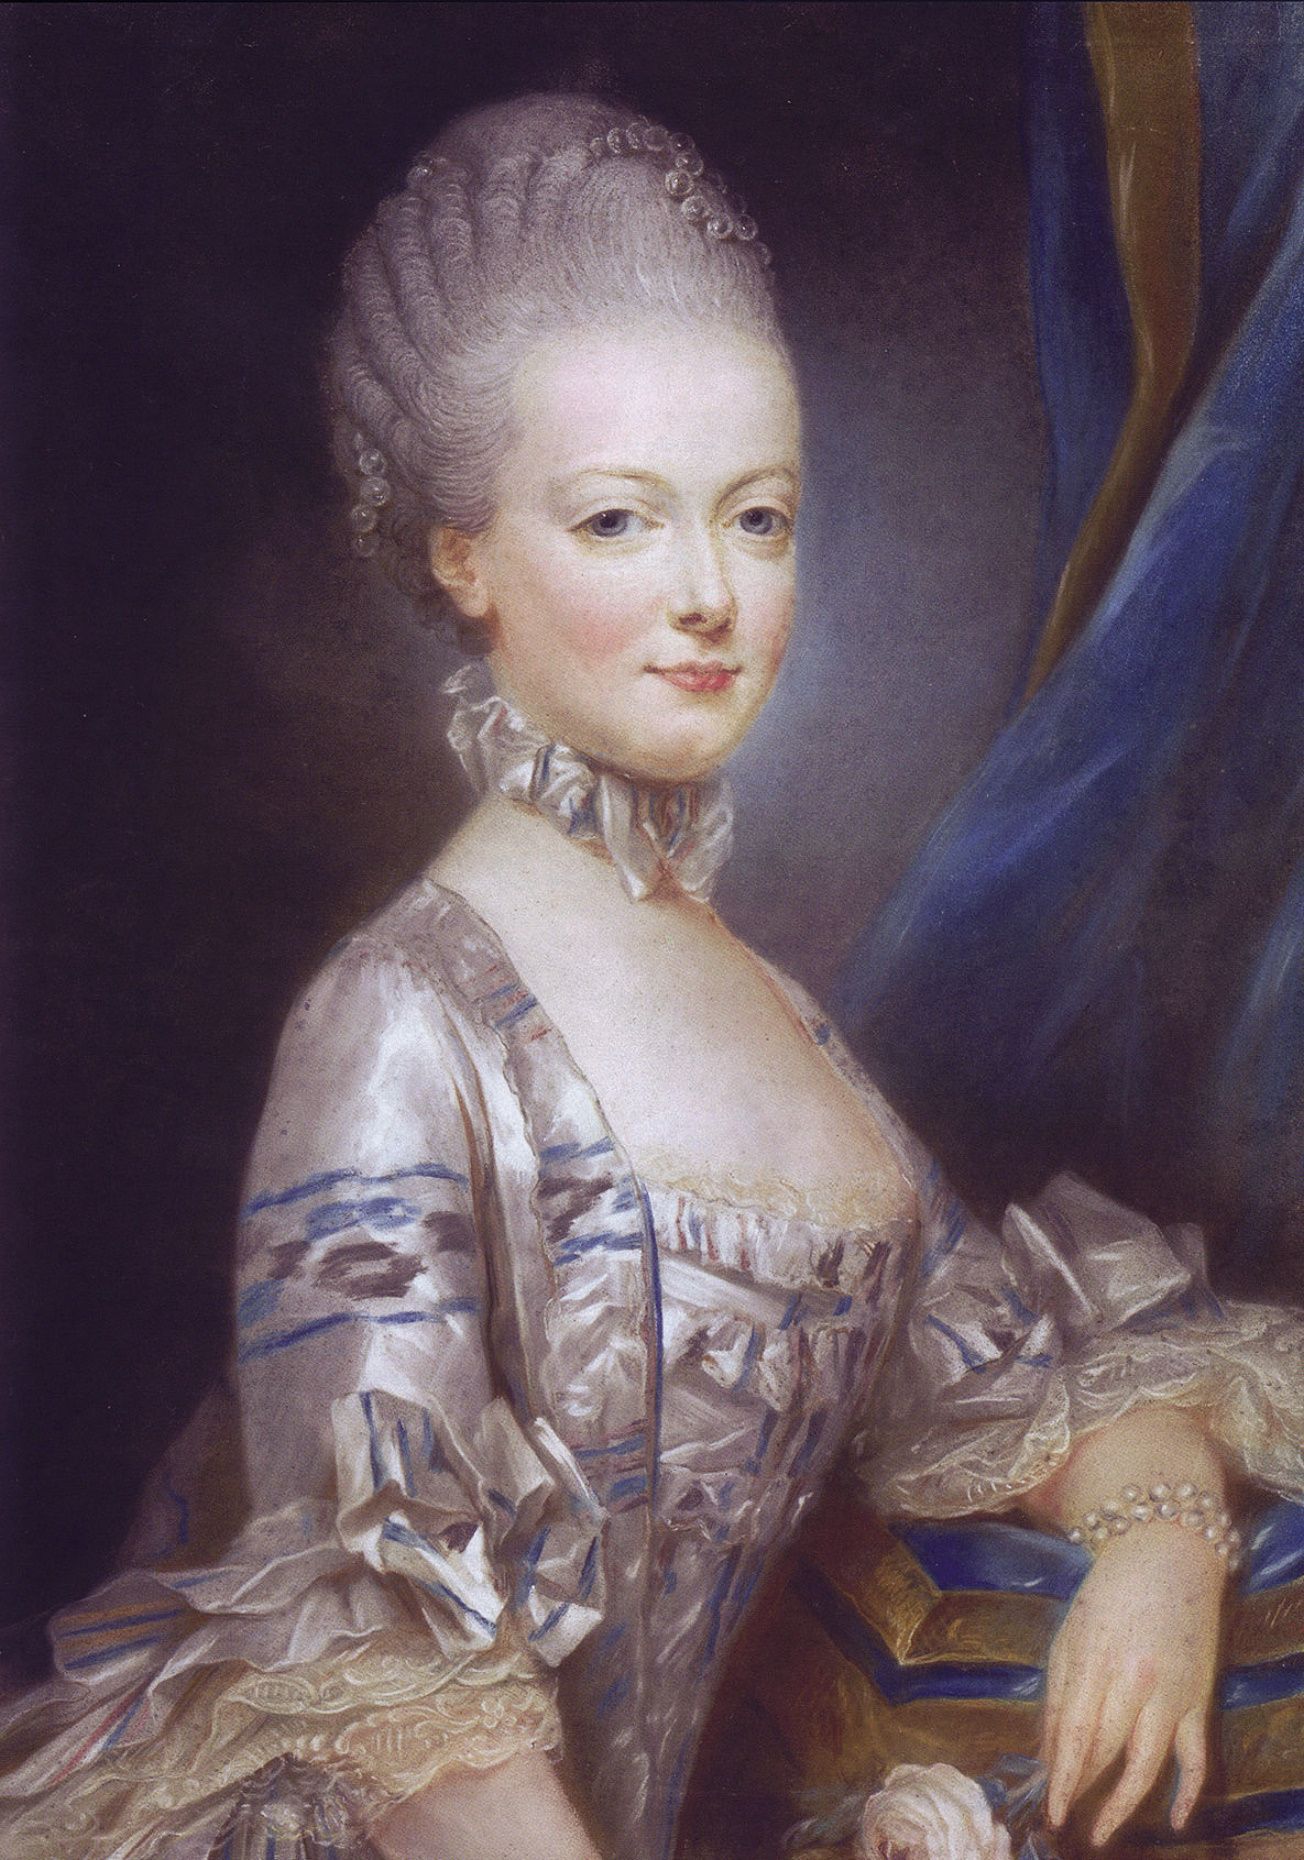 Queen Marie Antoinette of France by Joseph Ducreux